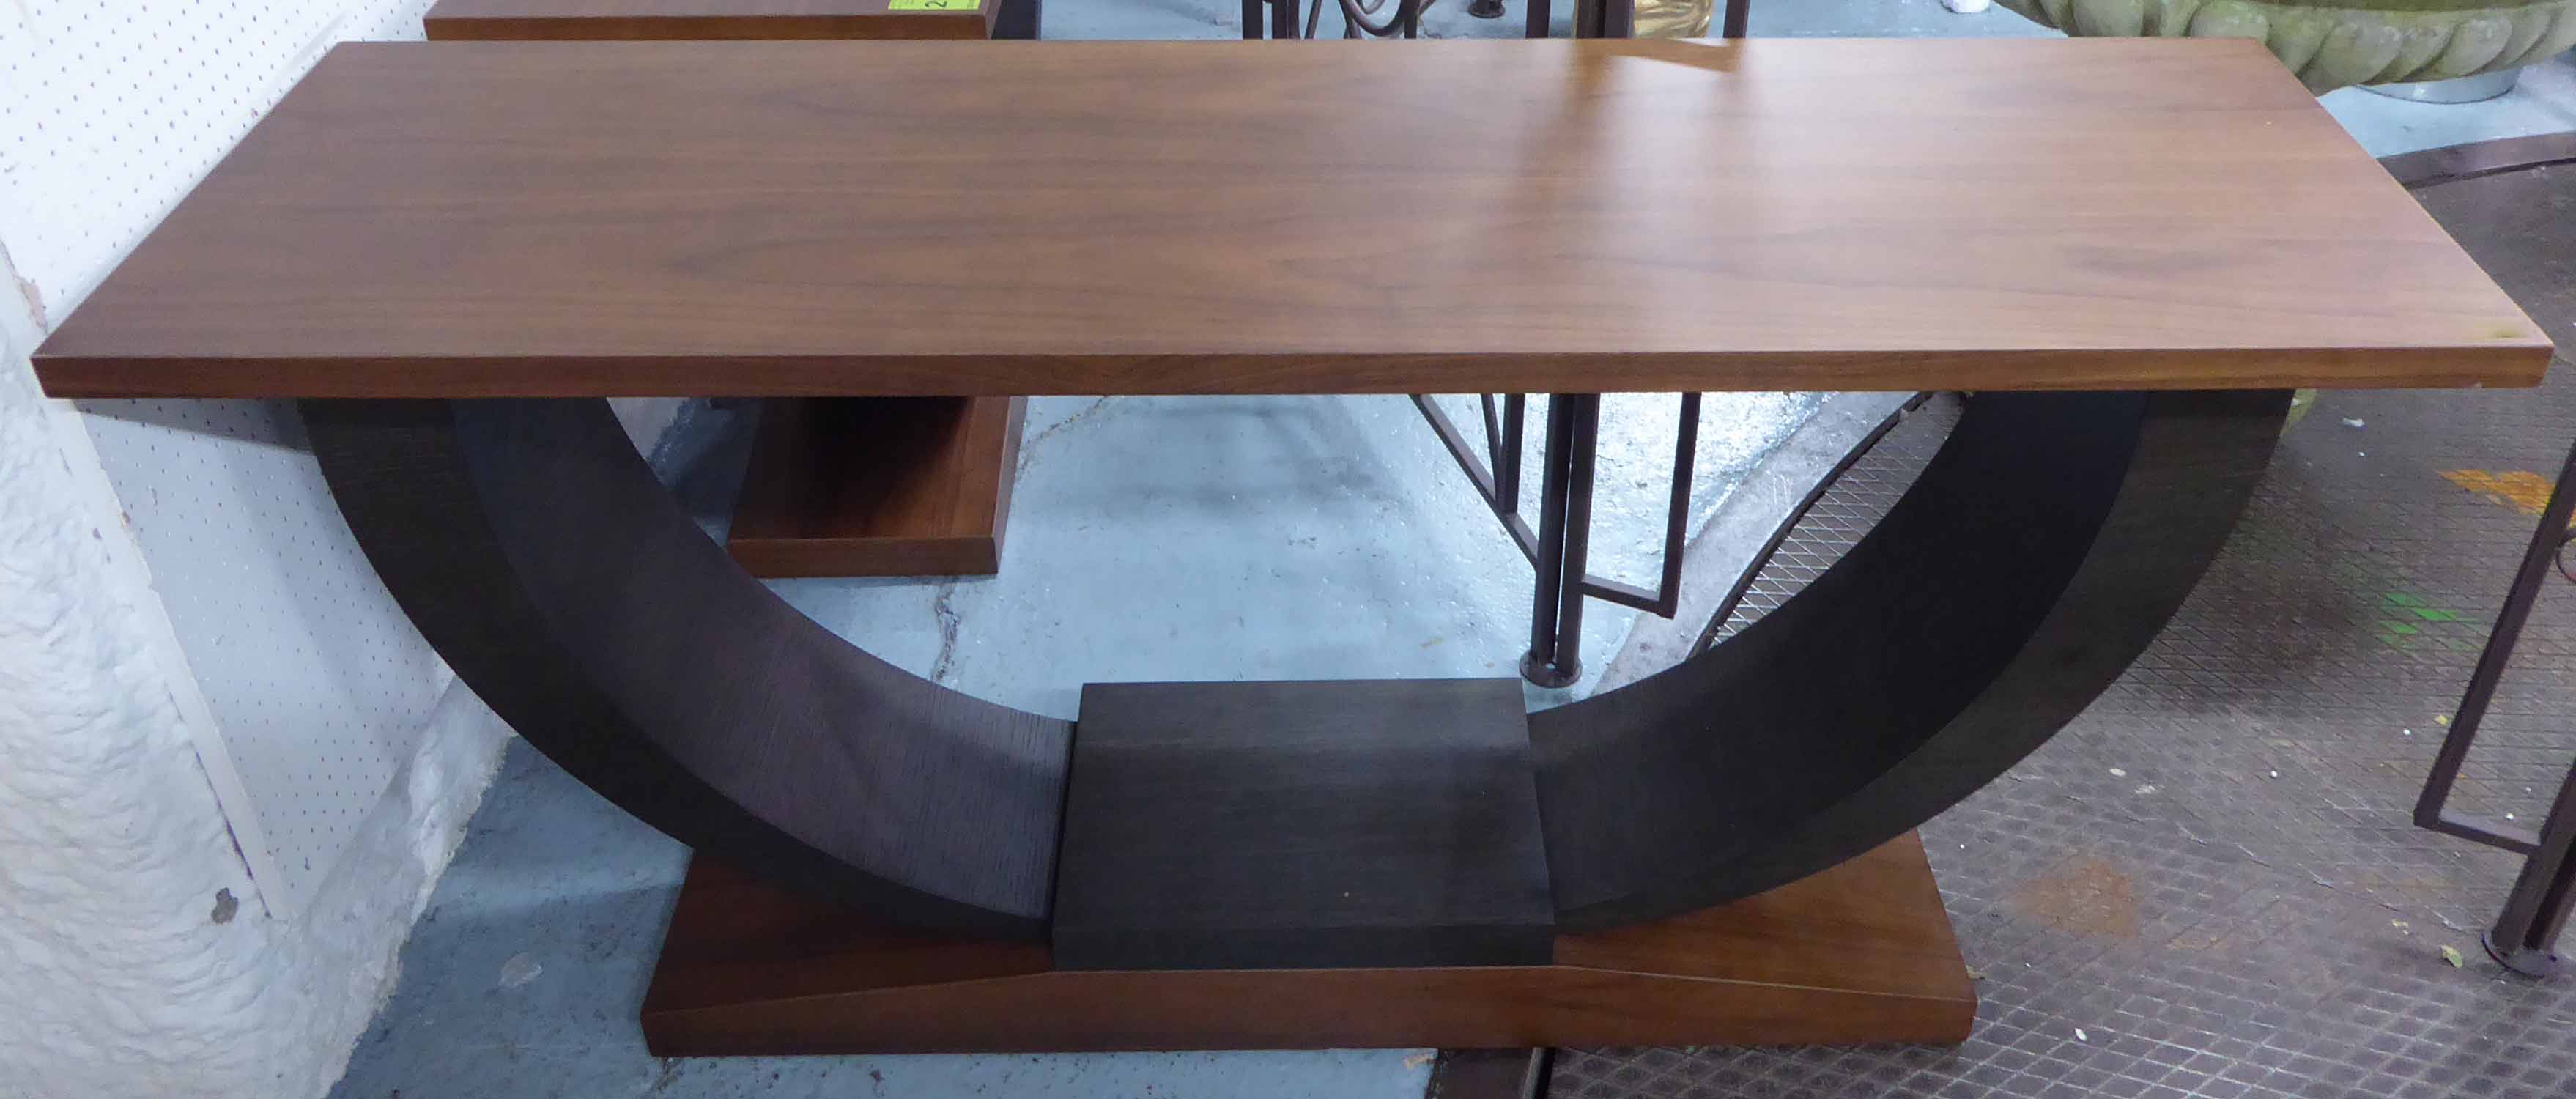 JUSTIN VAN BREDA ELTHAN CONSOLE TABLE, 150cm x 45cm x 75cm H.